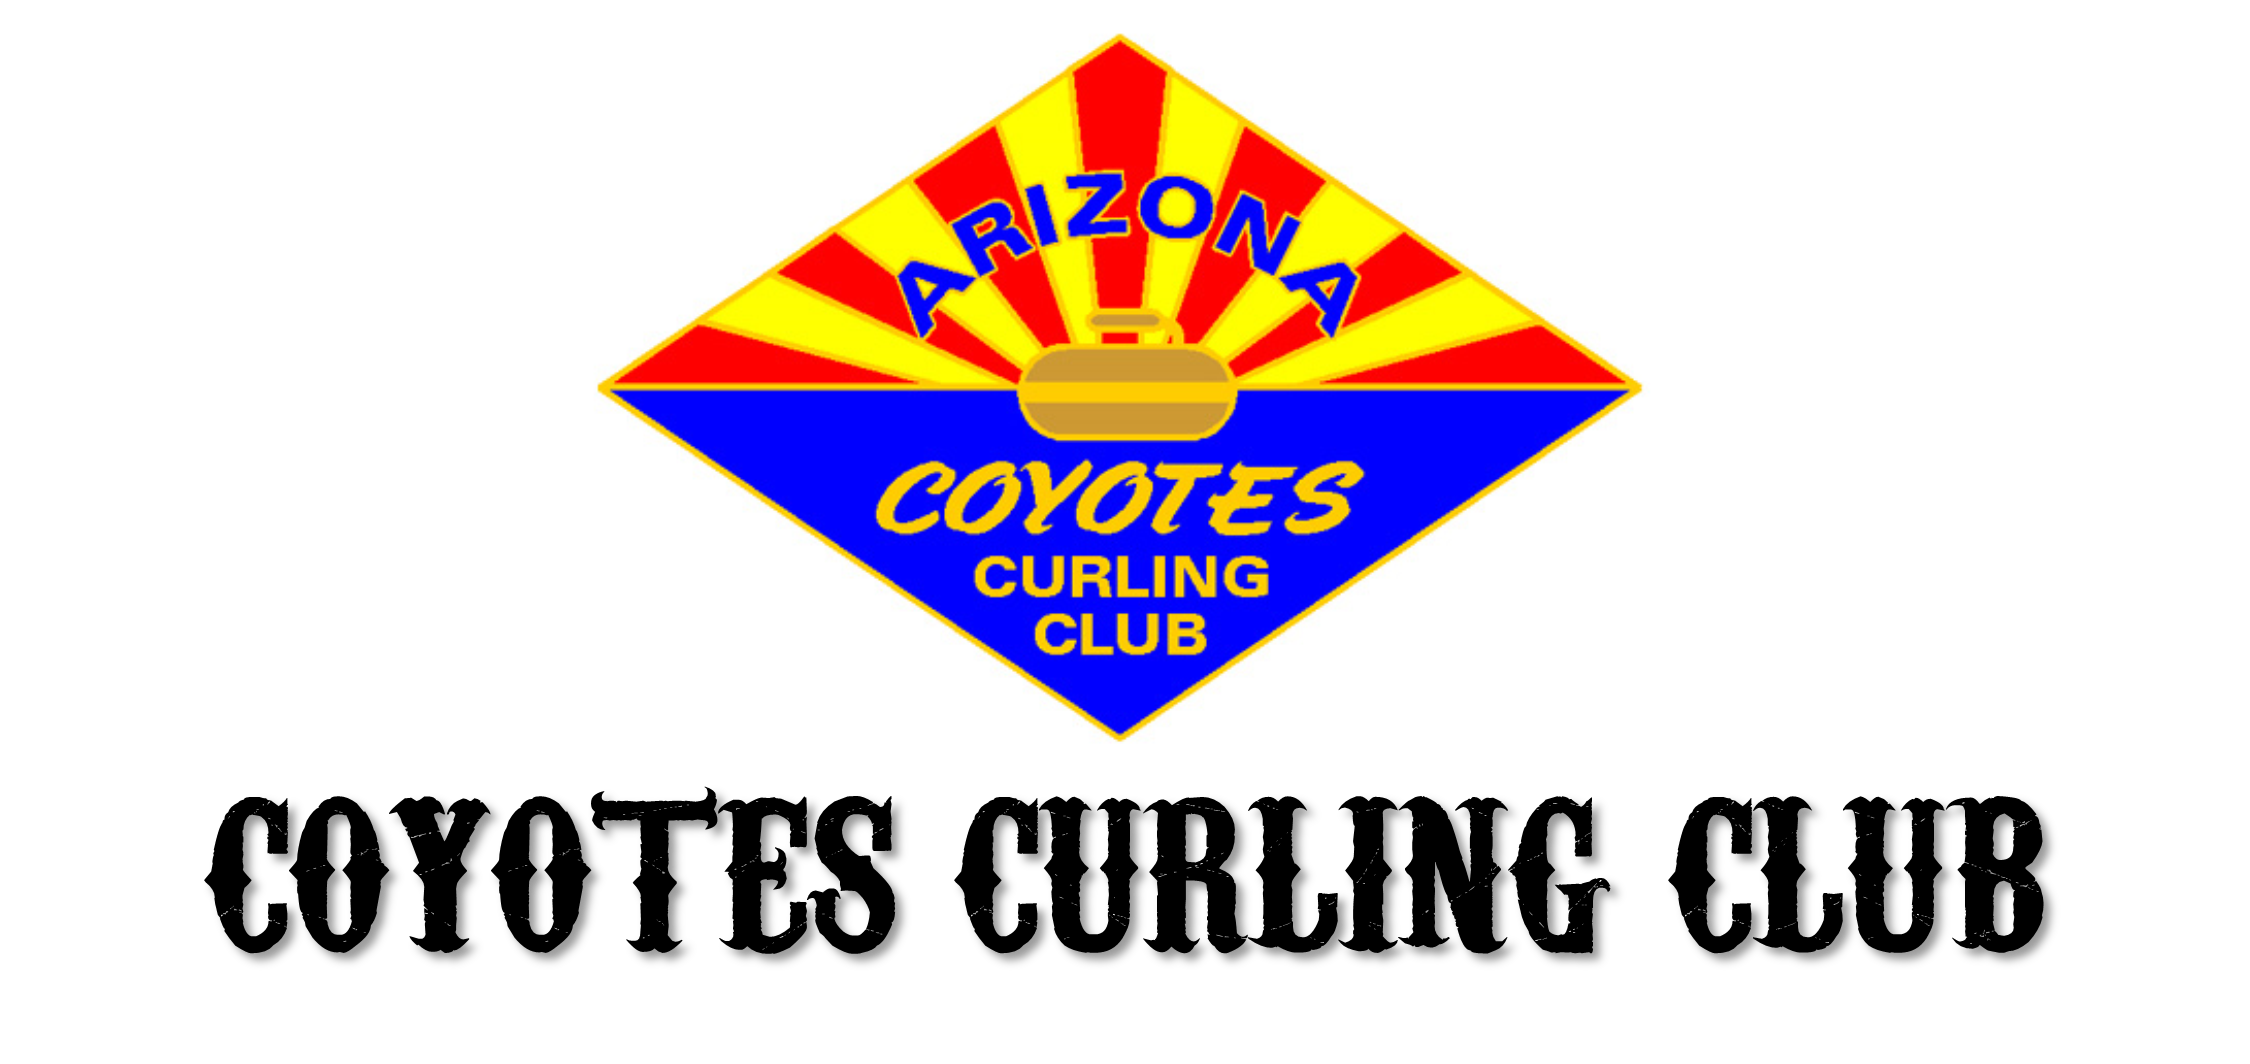 Coyotes Curling Club